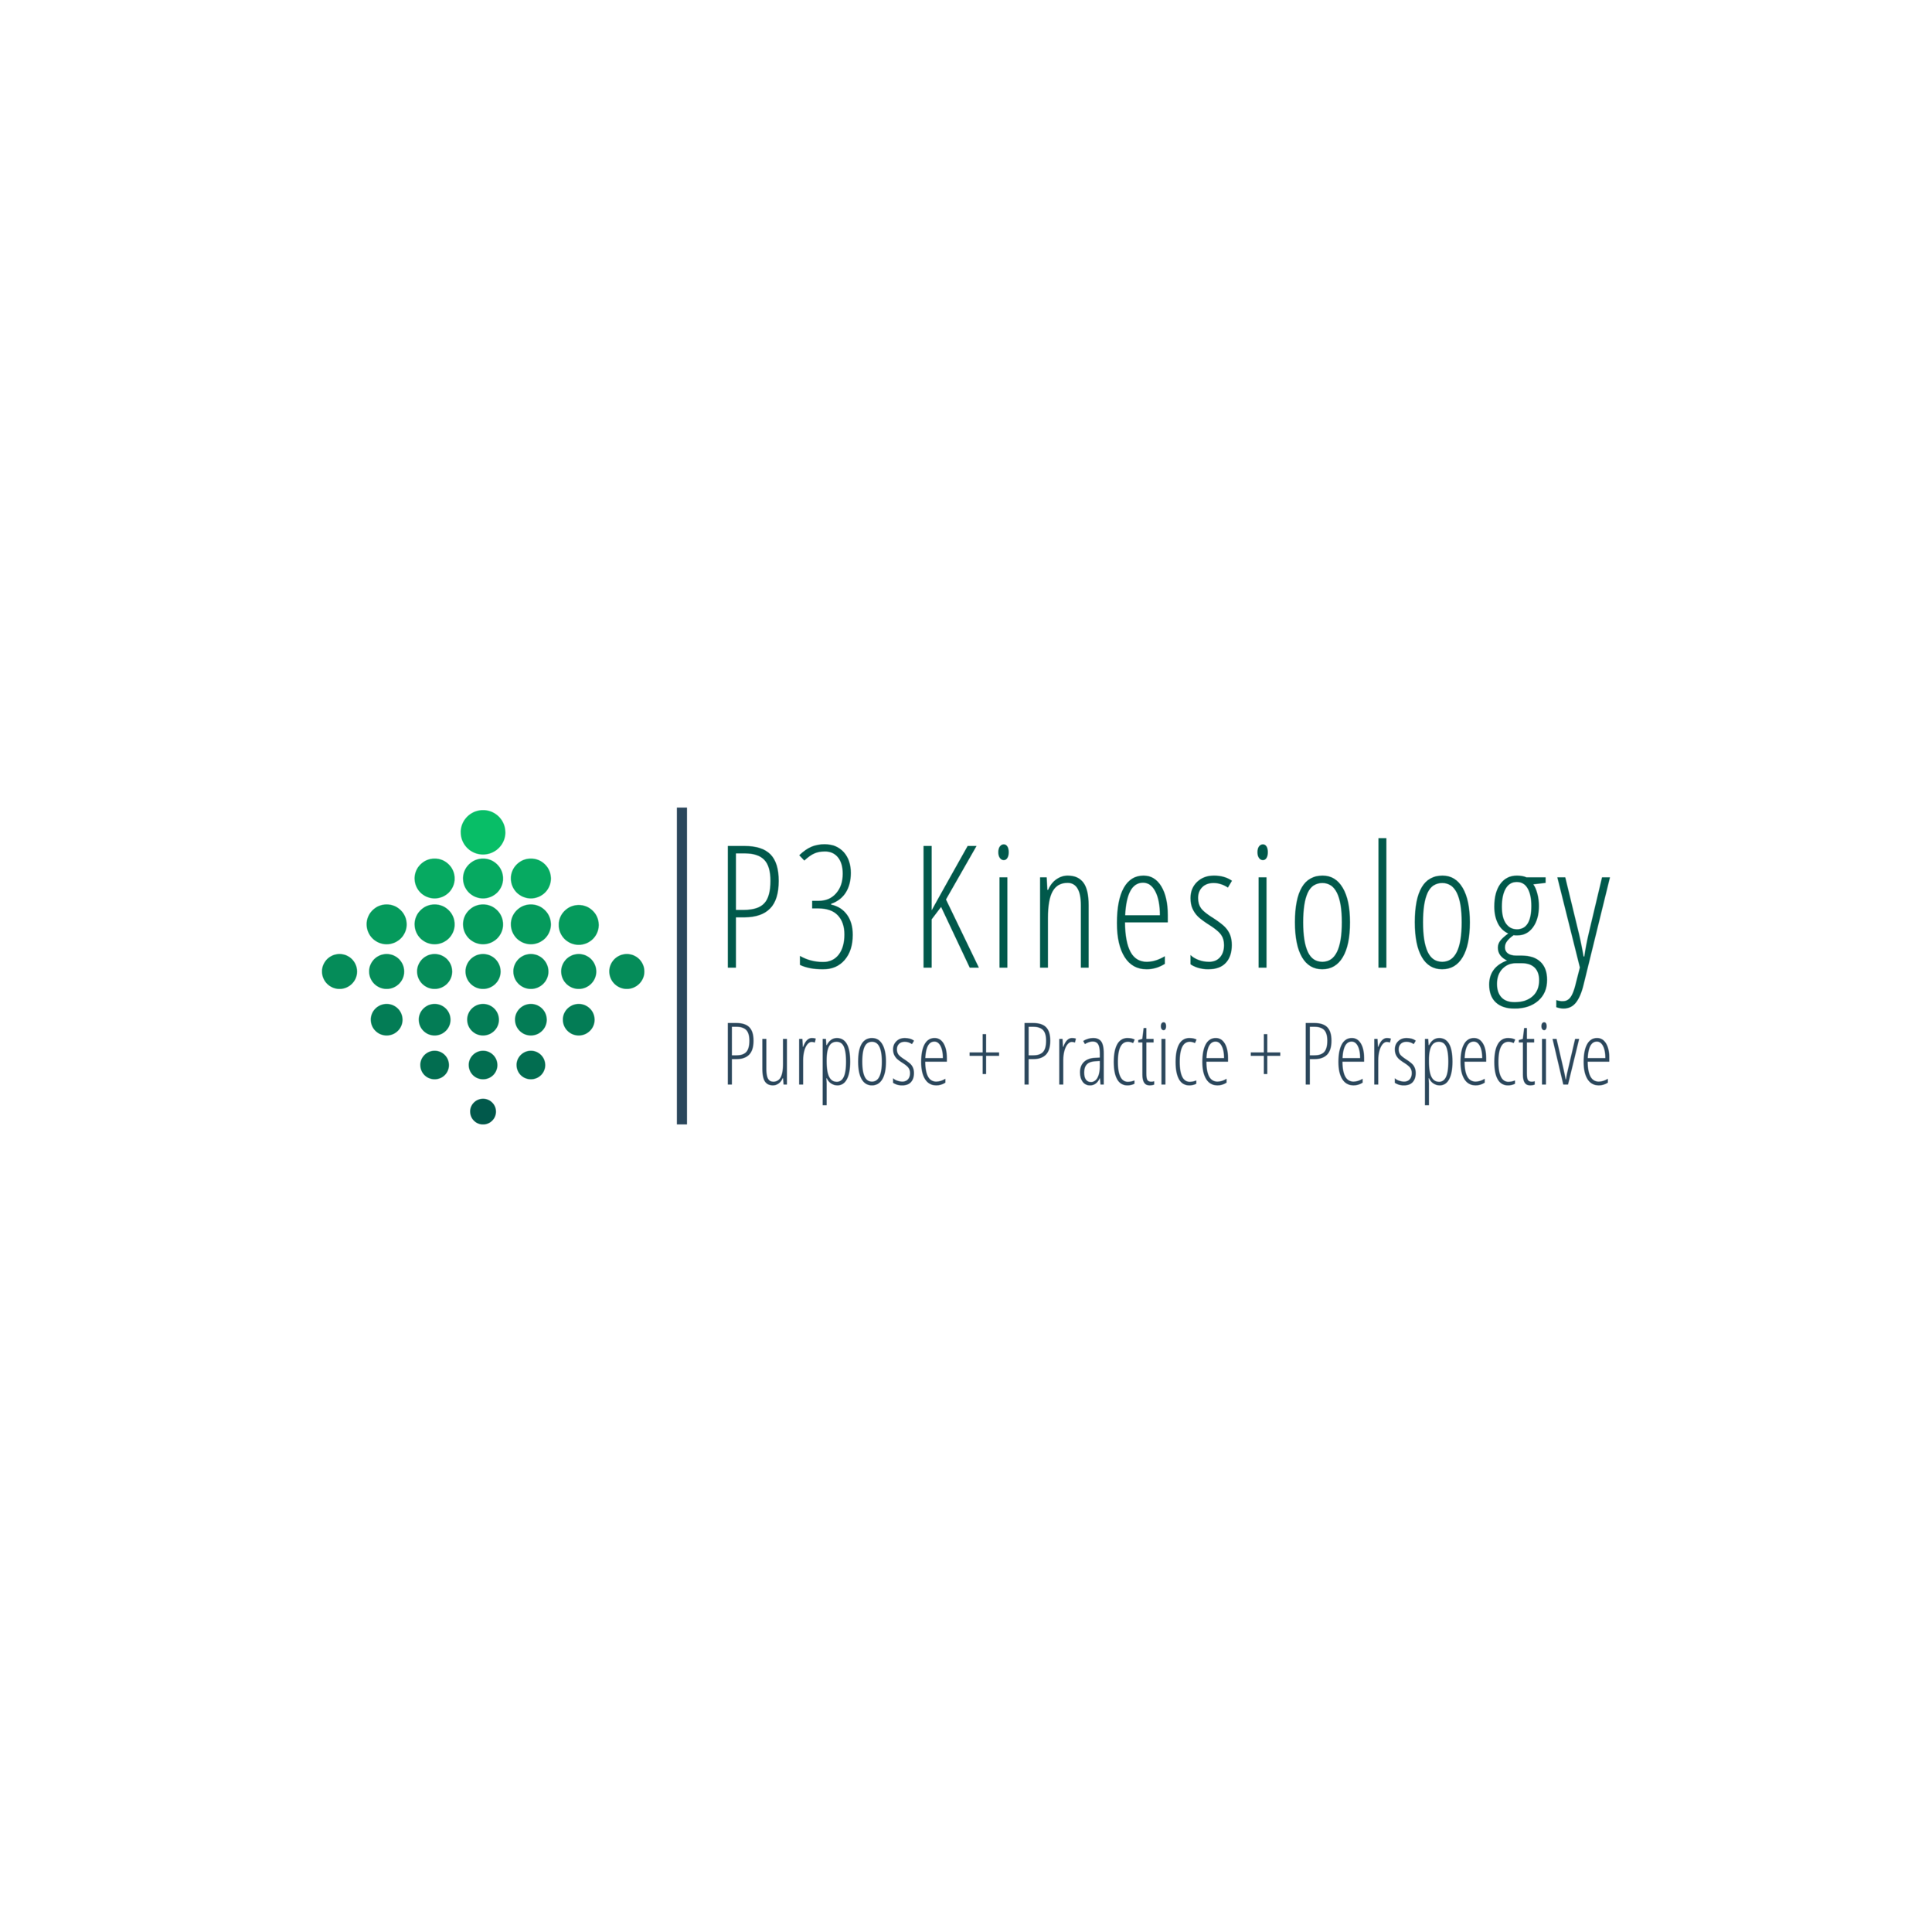 P3 Kinesiology